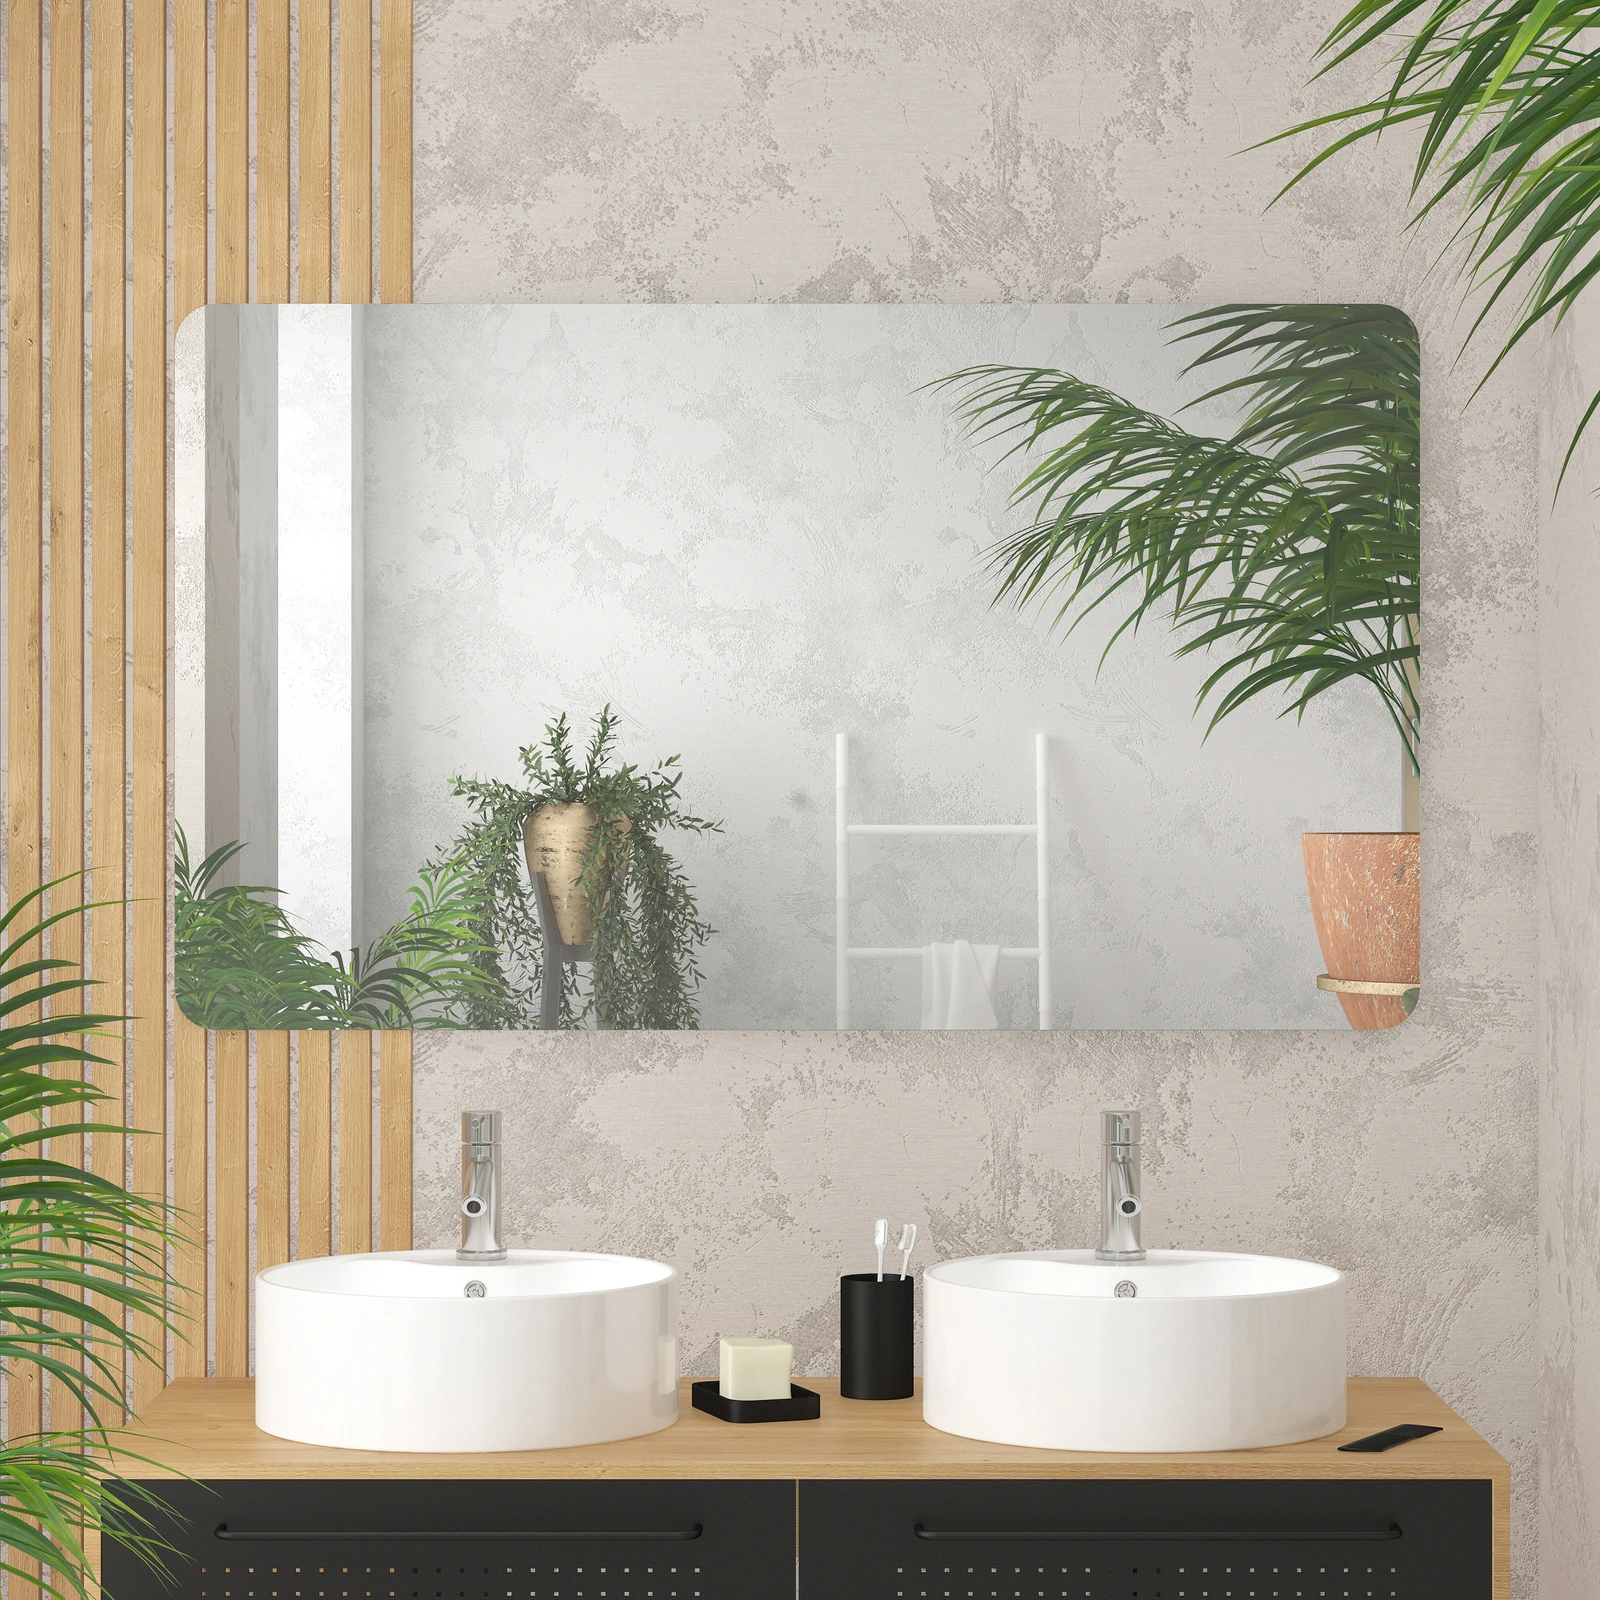 Miroir salle de bain - 120x70cm - GO - Aurlane